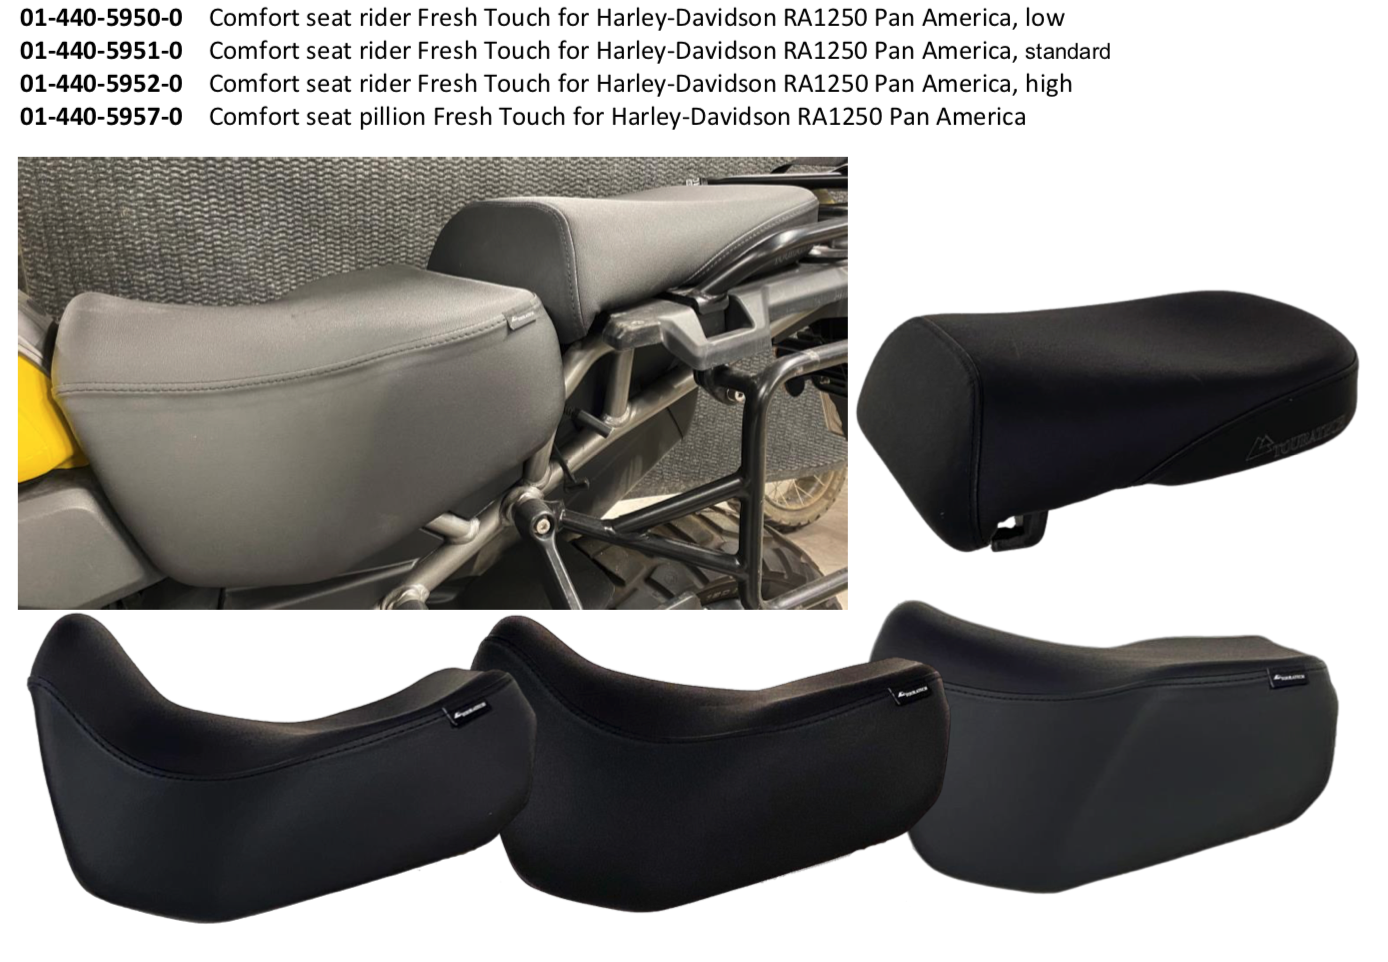 Comfort seat pillion Fresh Touch Harley-Davidson RA1250 Pan America